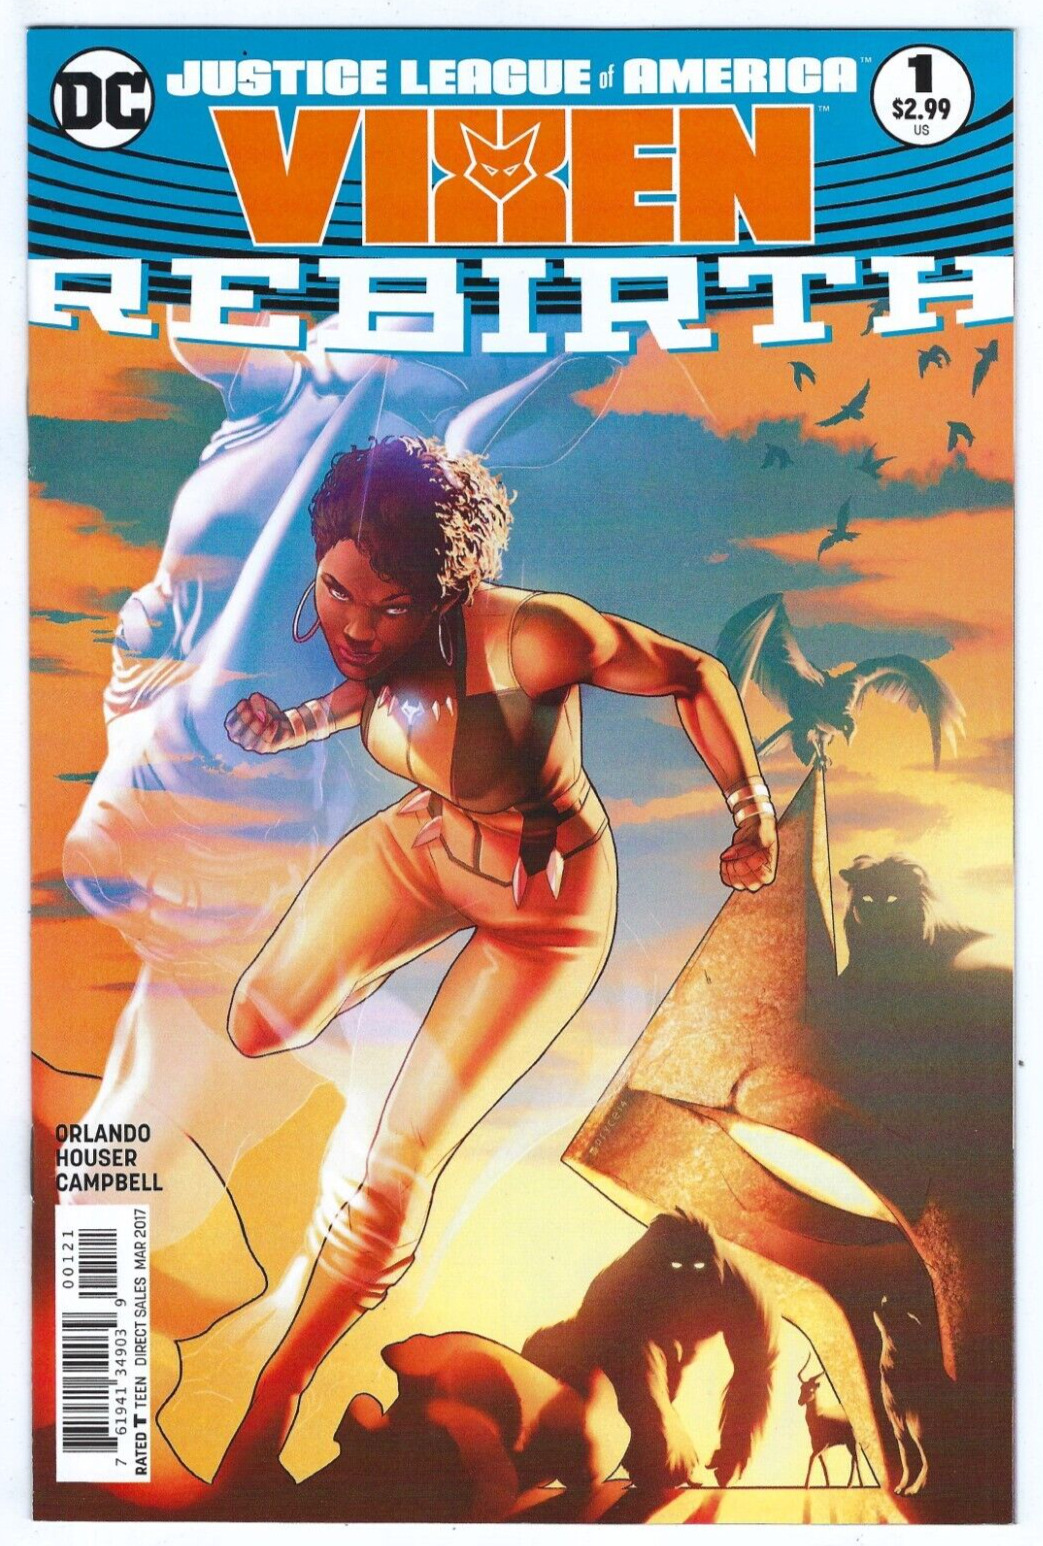 DC Comics JUSTICE LEAGUE OF AMERICA VIXEN REBIRTH #1 first printing cover B